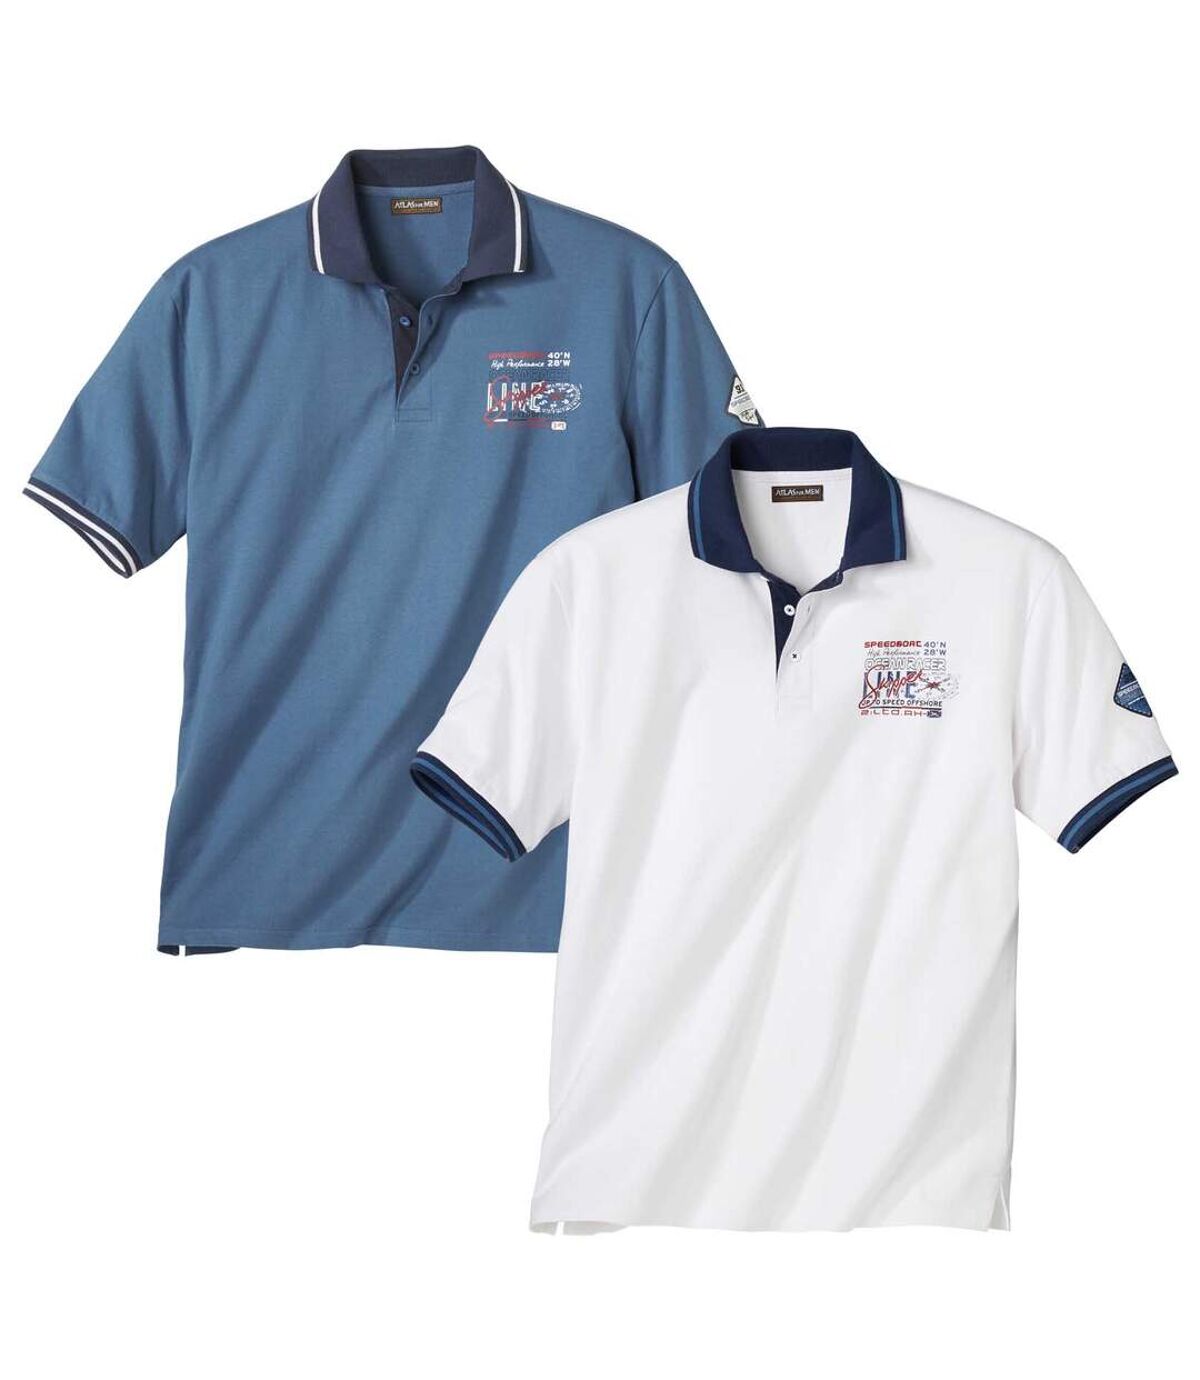 Pack of 2 Men's Skipper Polo Shirts - White and Blue Atlas For Men